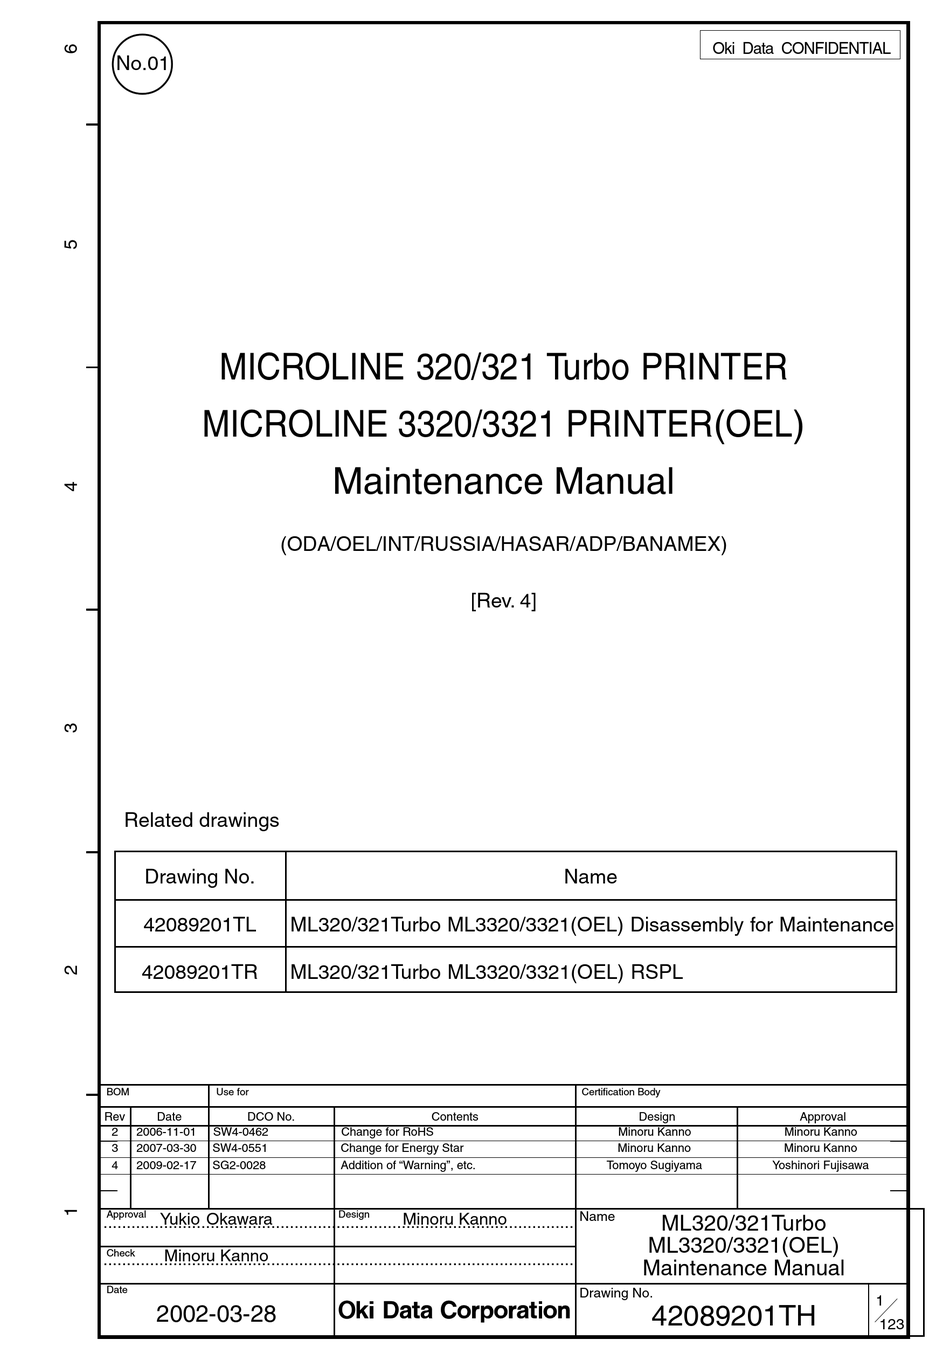 print out settings okidata microline 320 turbo